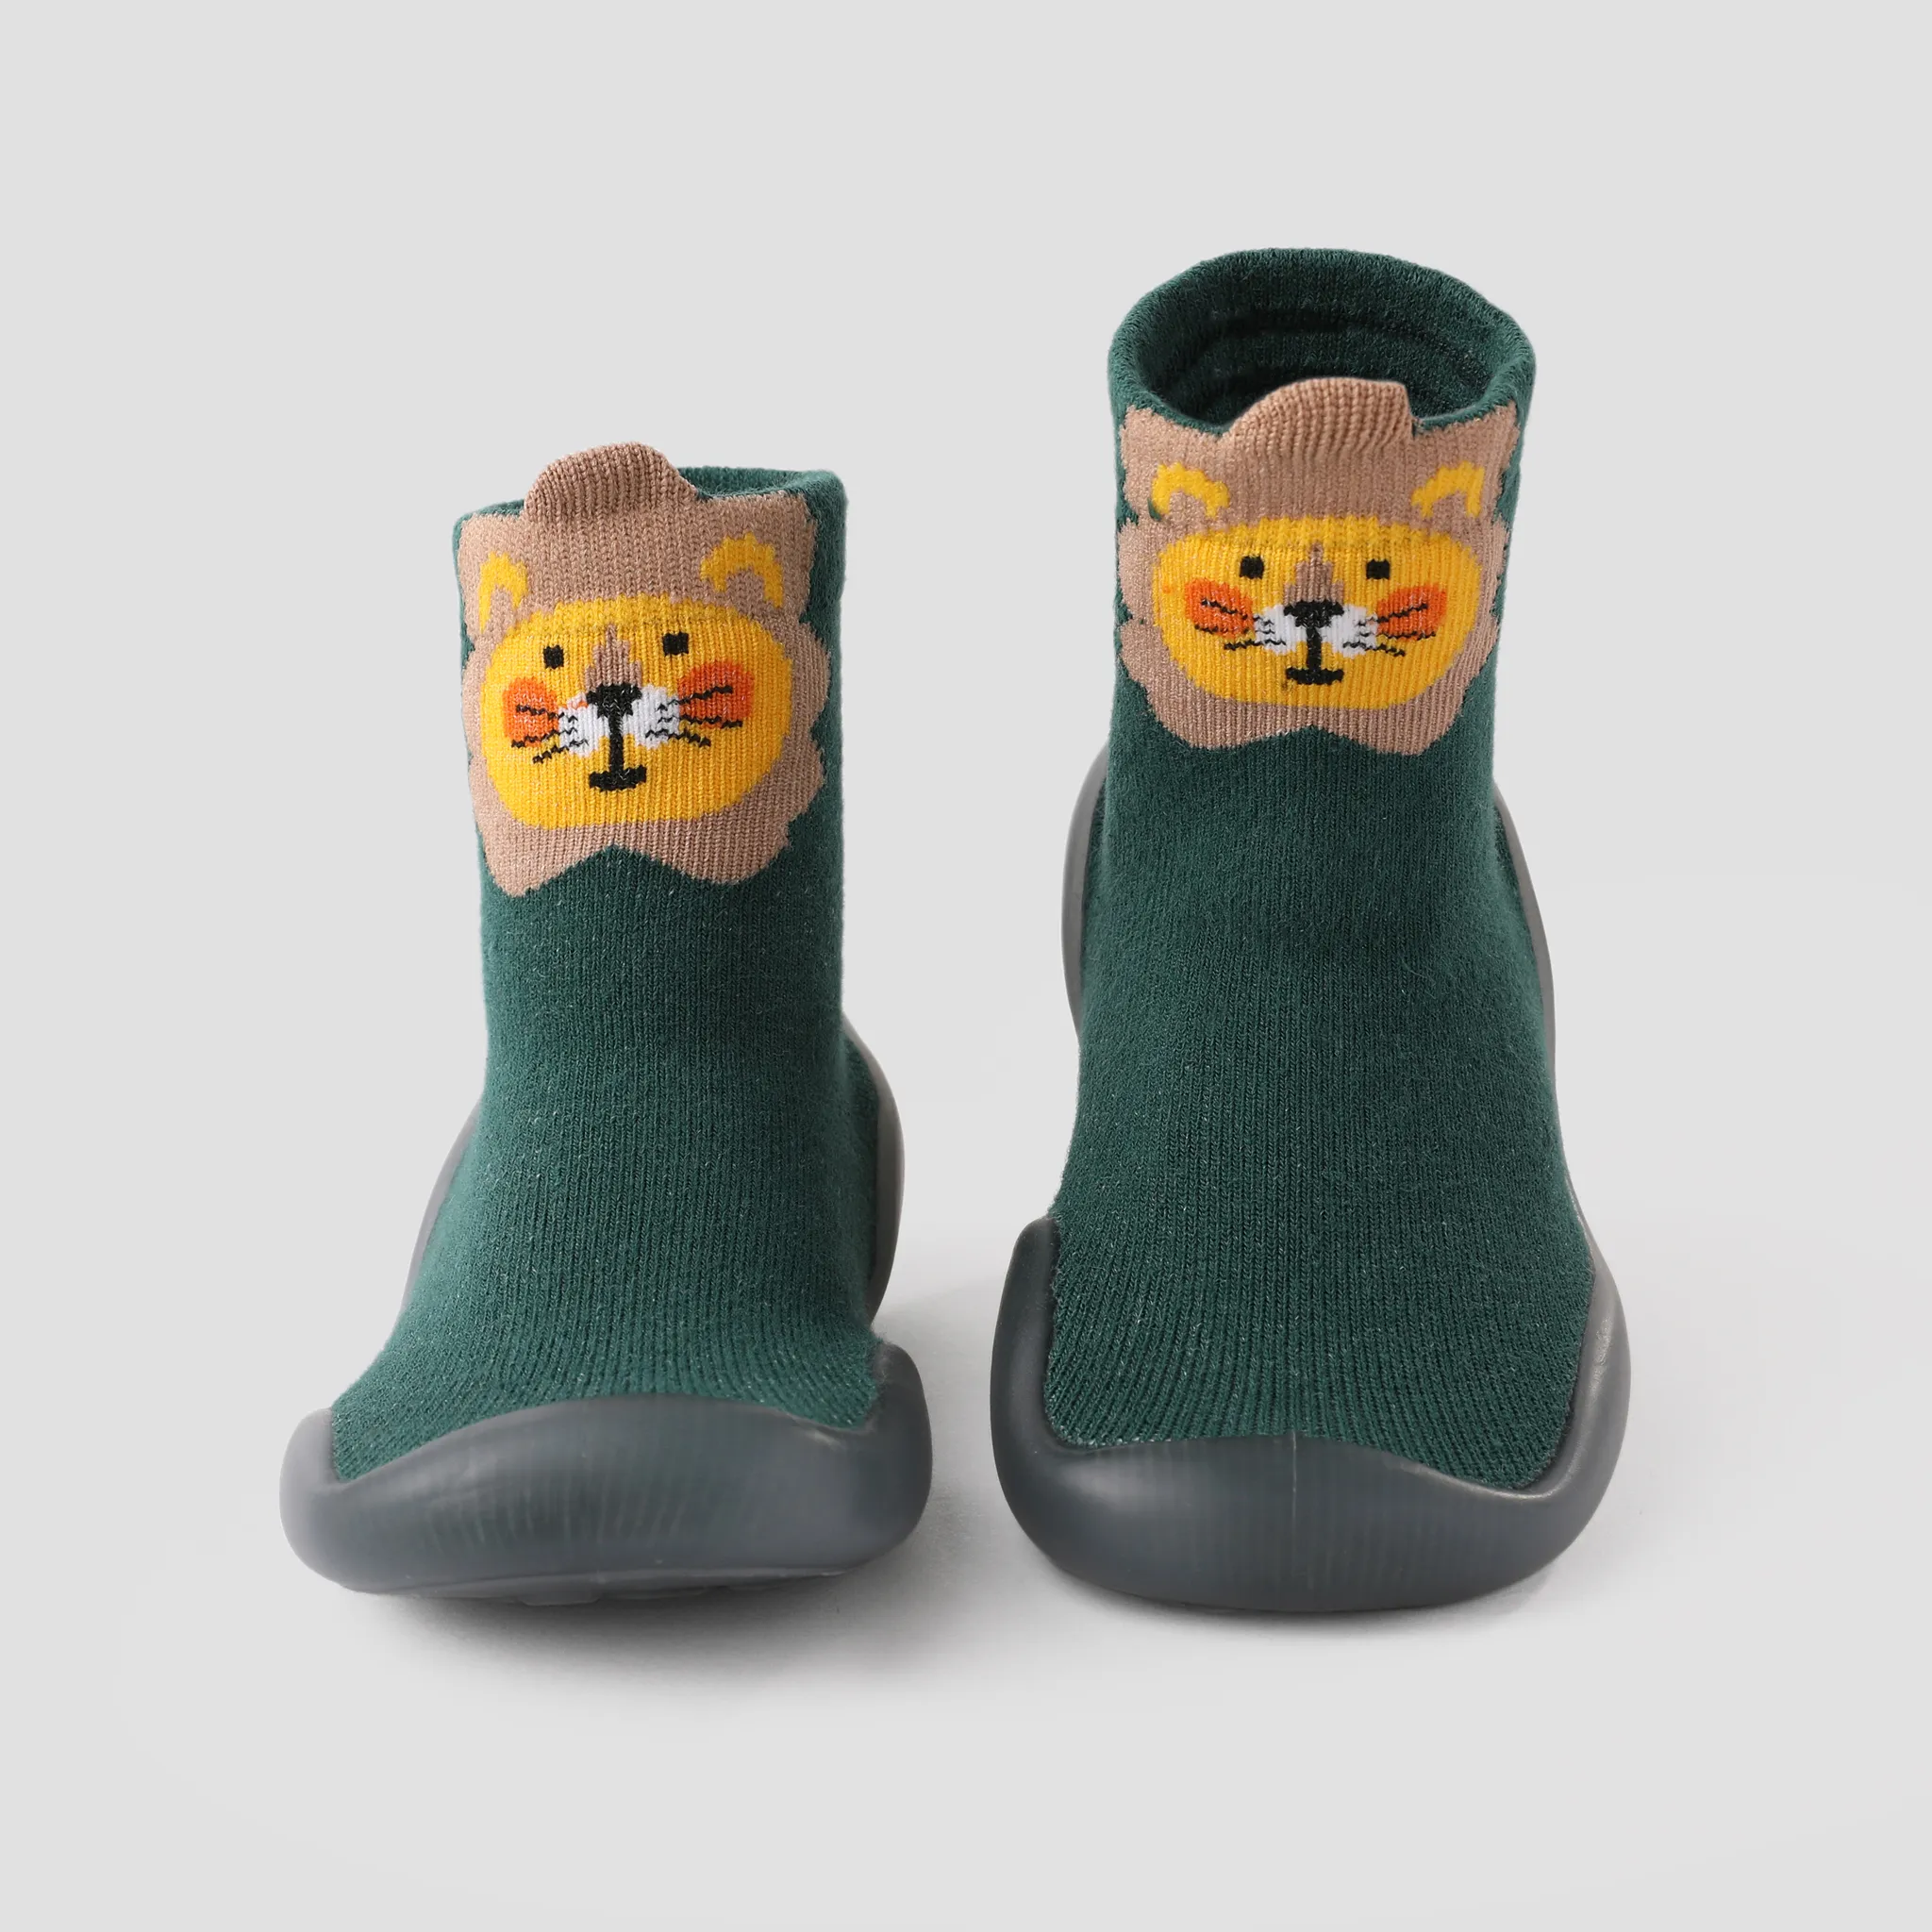 Baby & Toddler Childlike Animal Pattern Design Prewalker Socks/Shoes